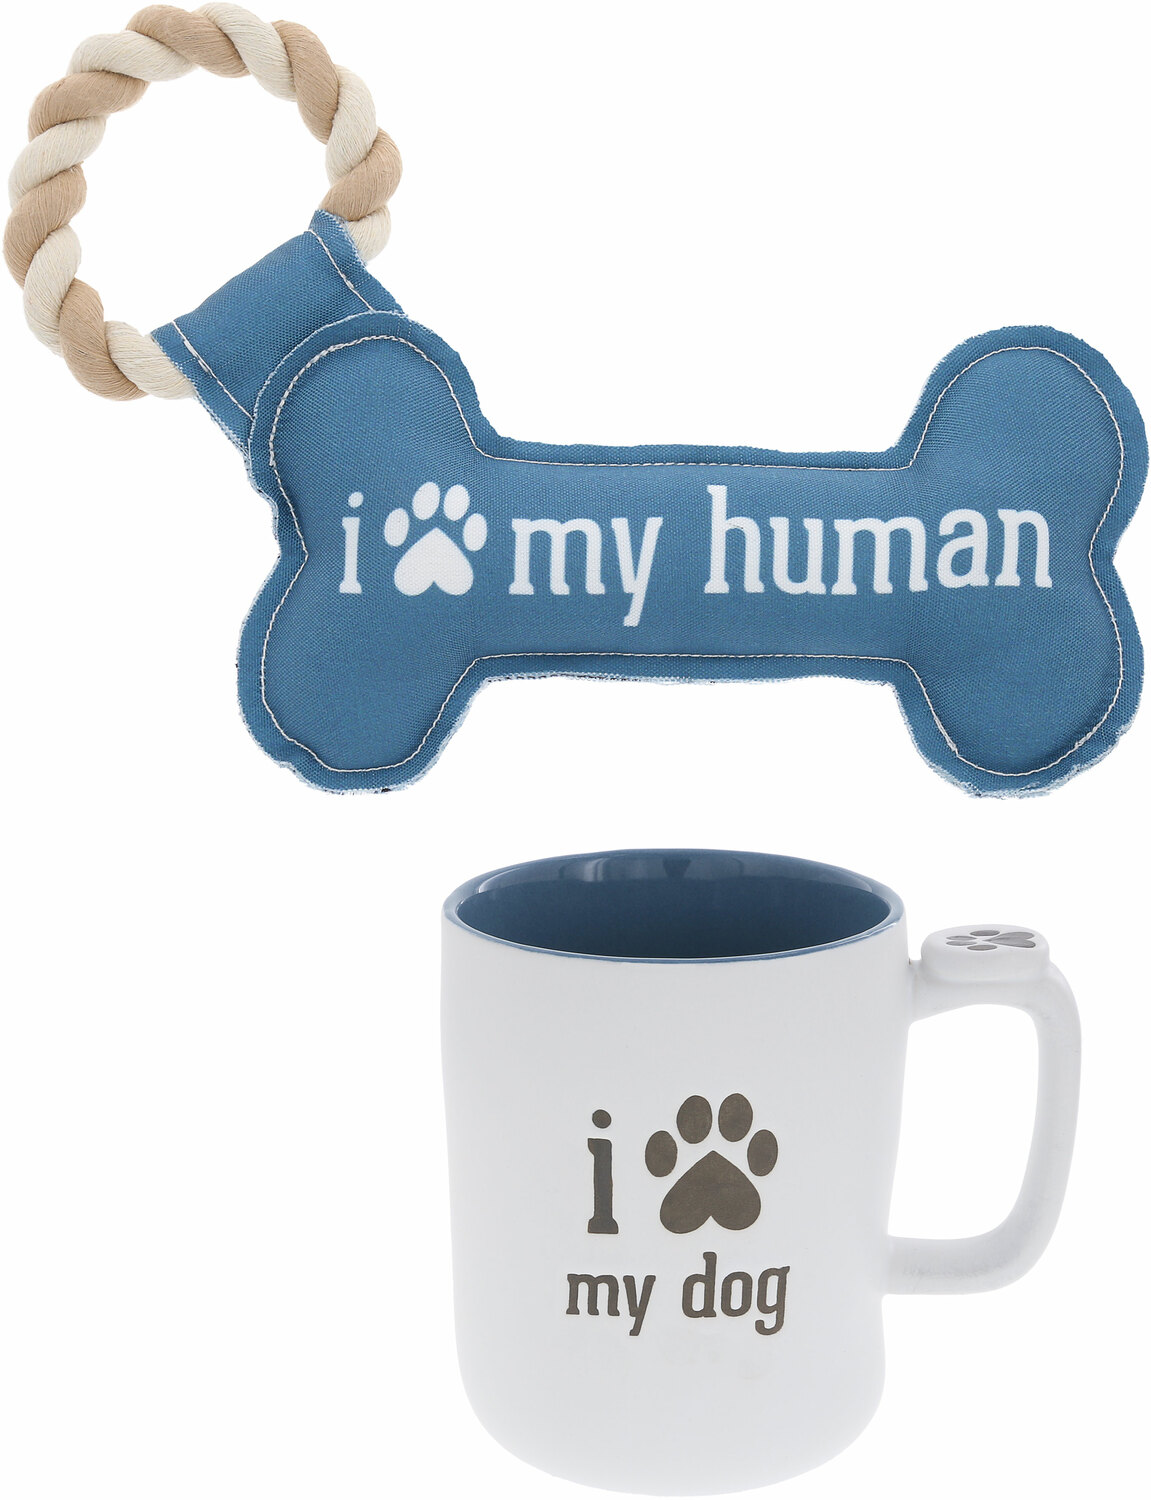 My Dog/My Human by We Pets - My Dog/My Human - 18 oz Mug & Pet Toy Set